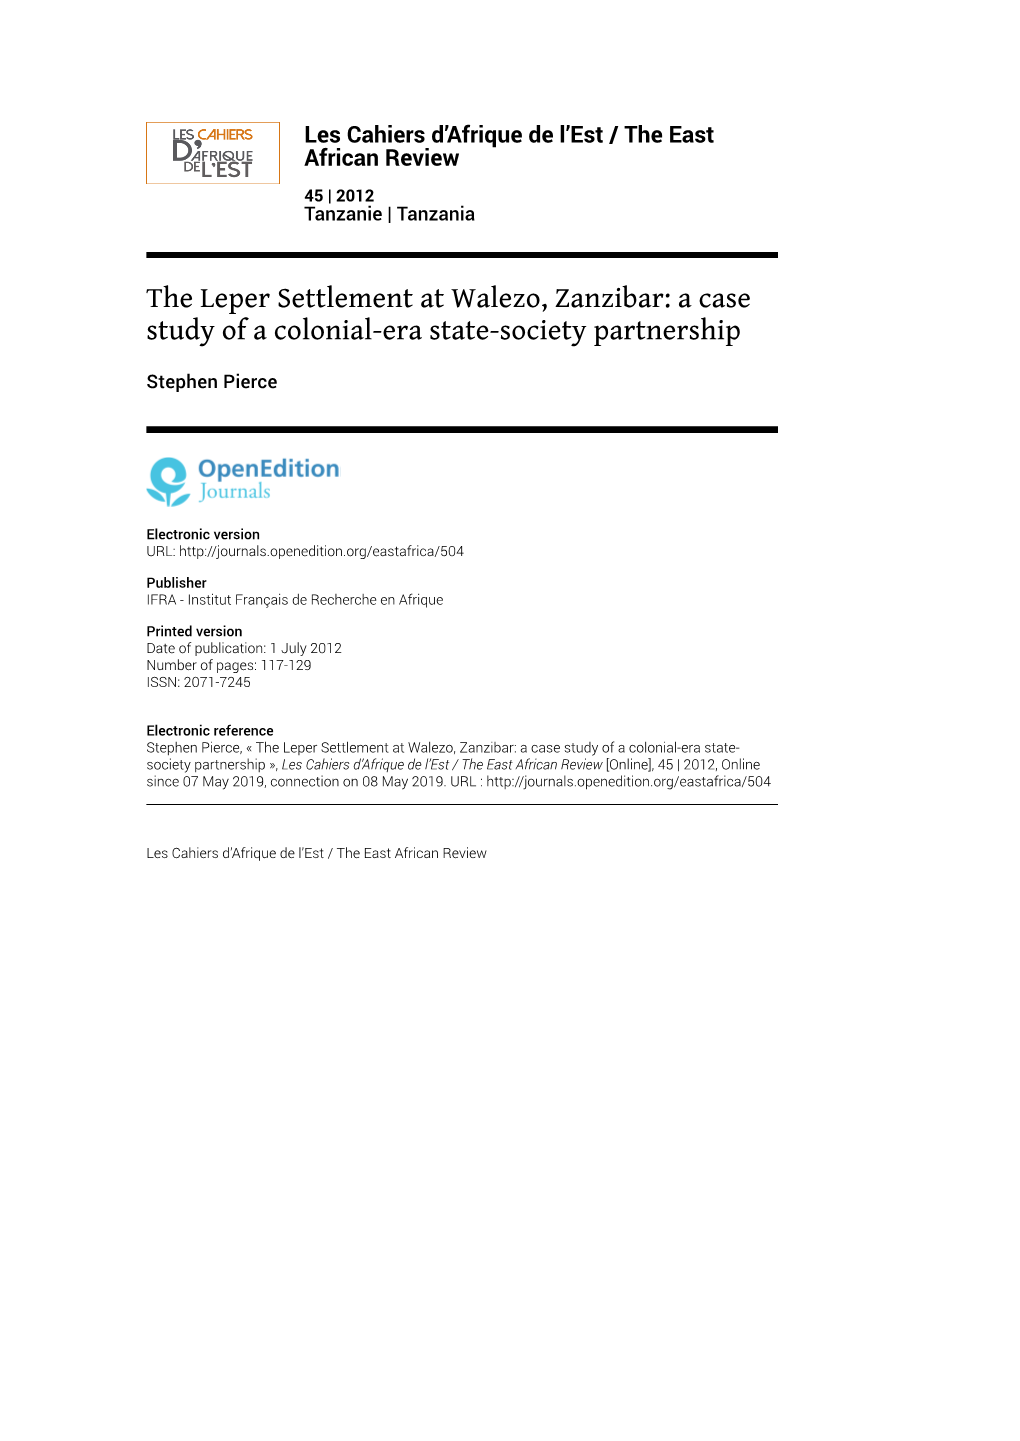 The Leper Settlement at Walezo, Zanzibar: a Case Study of a Colonial-Era State-Society Partnership